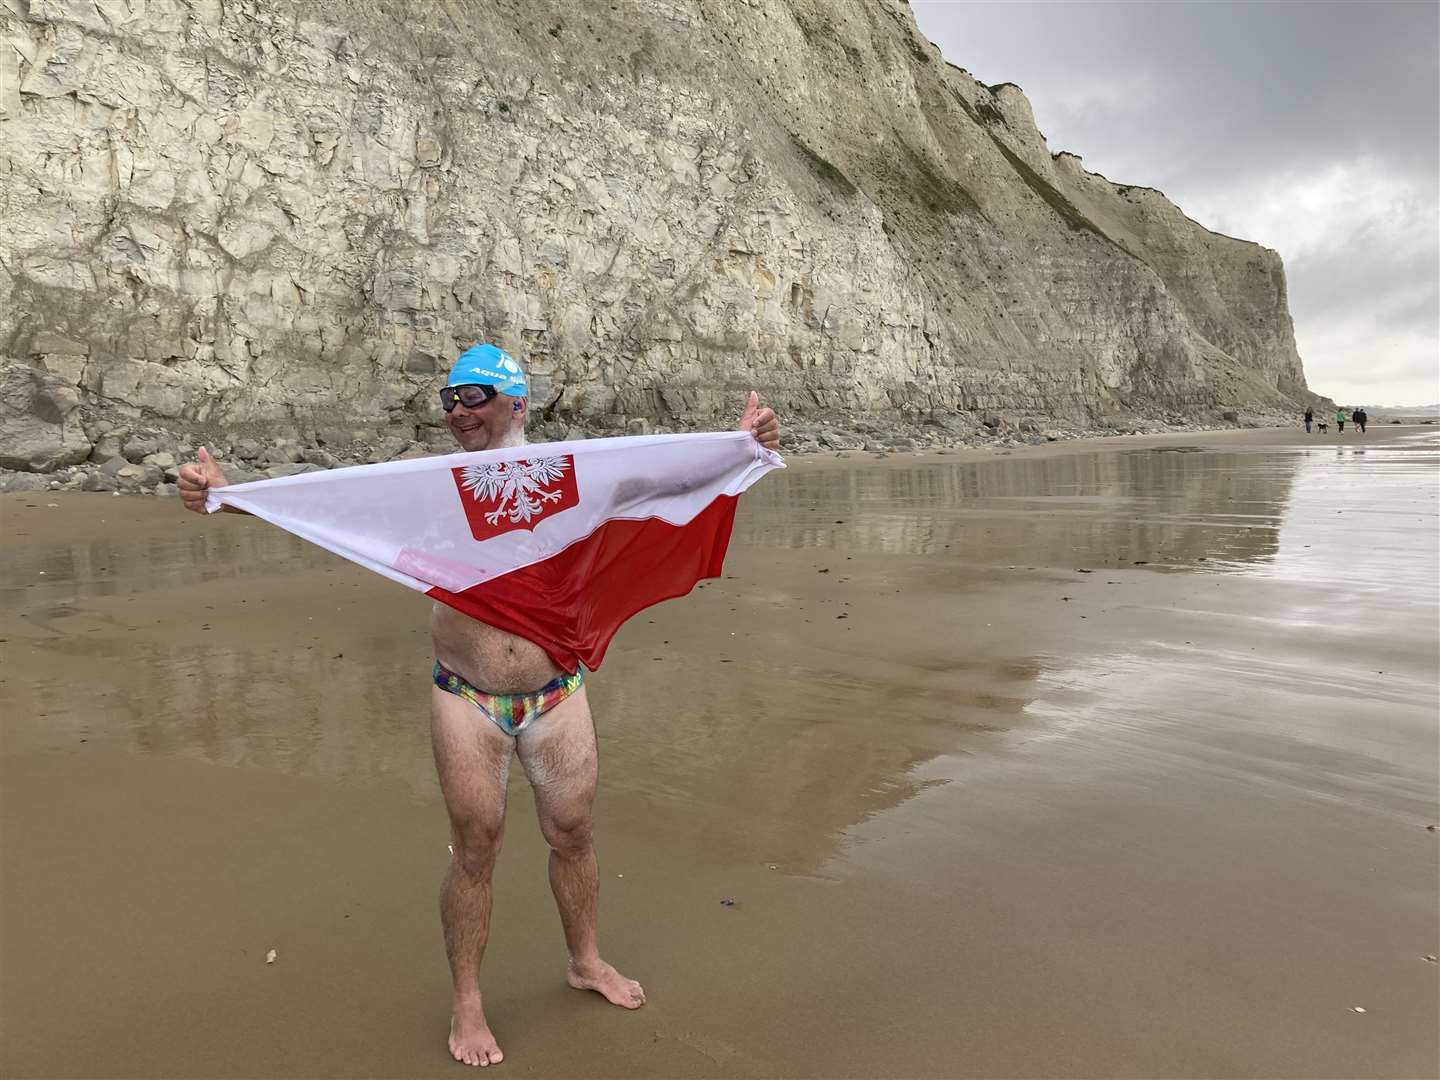 Piotr proudly displaying the Polish flag,